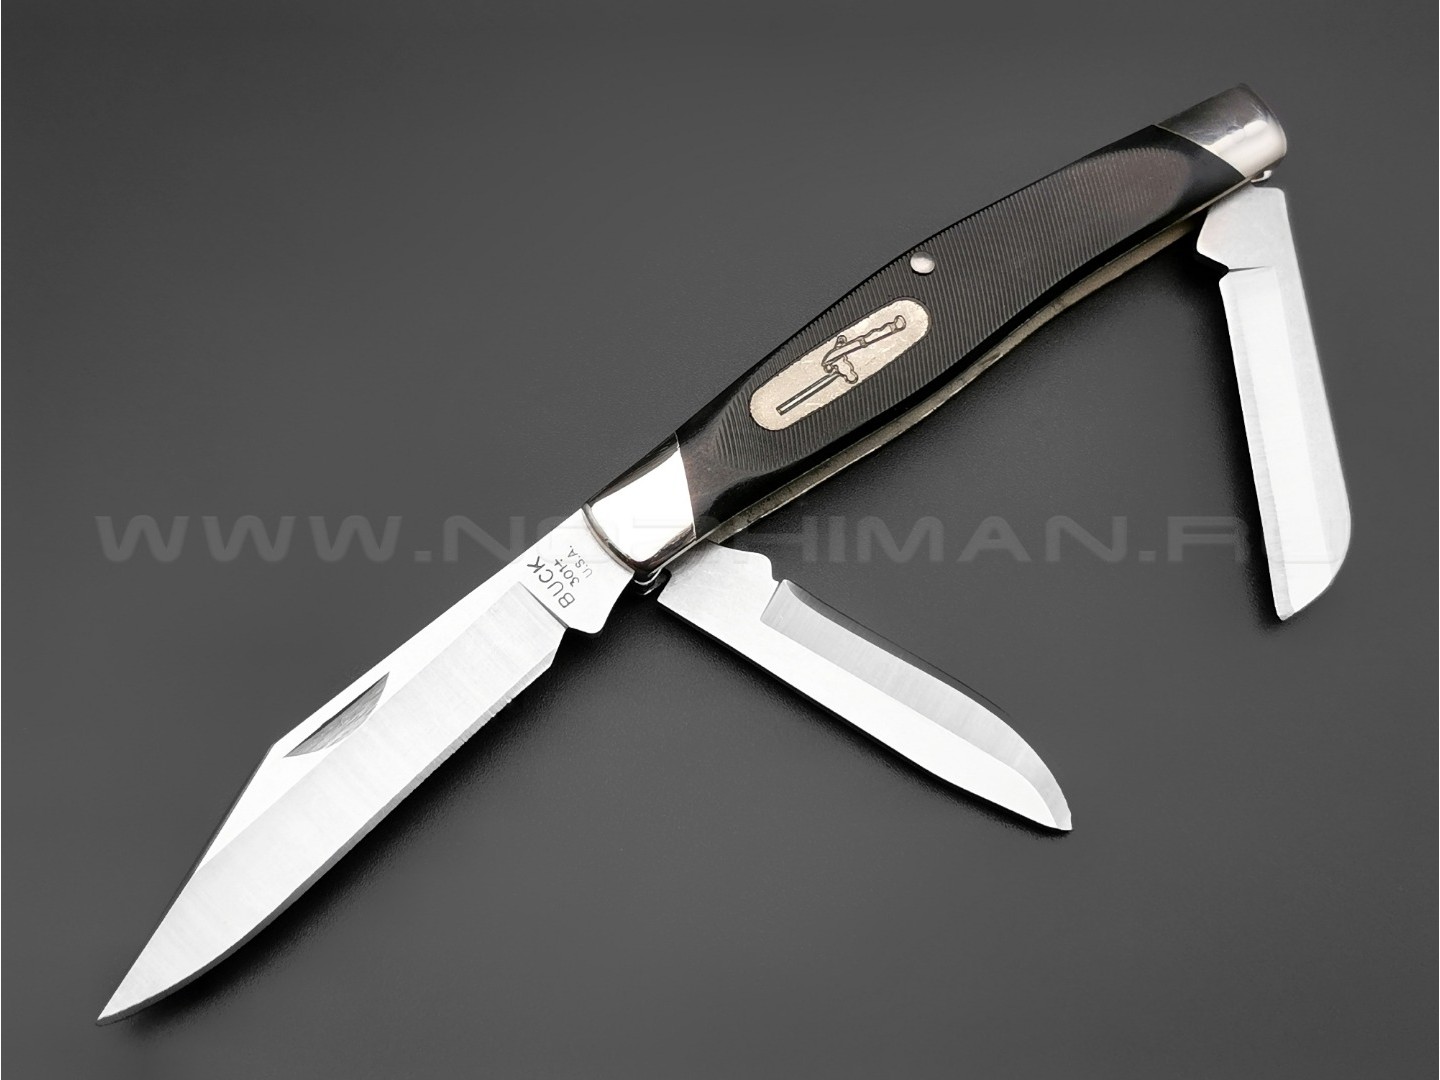 Нож Buck 301 Stockman 0301BKS сталь 420HC, рукоять Black Valox, нейзильбер